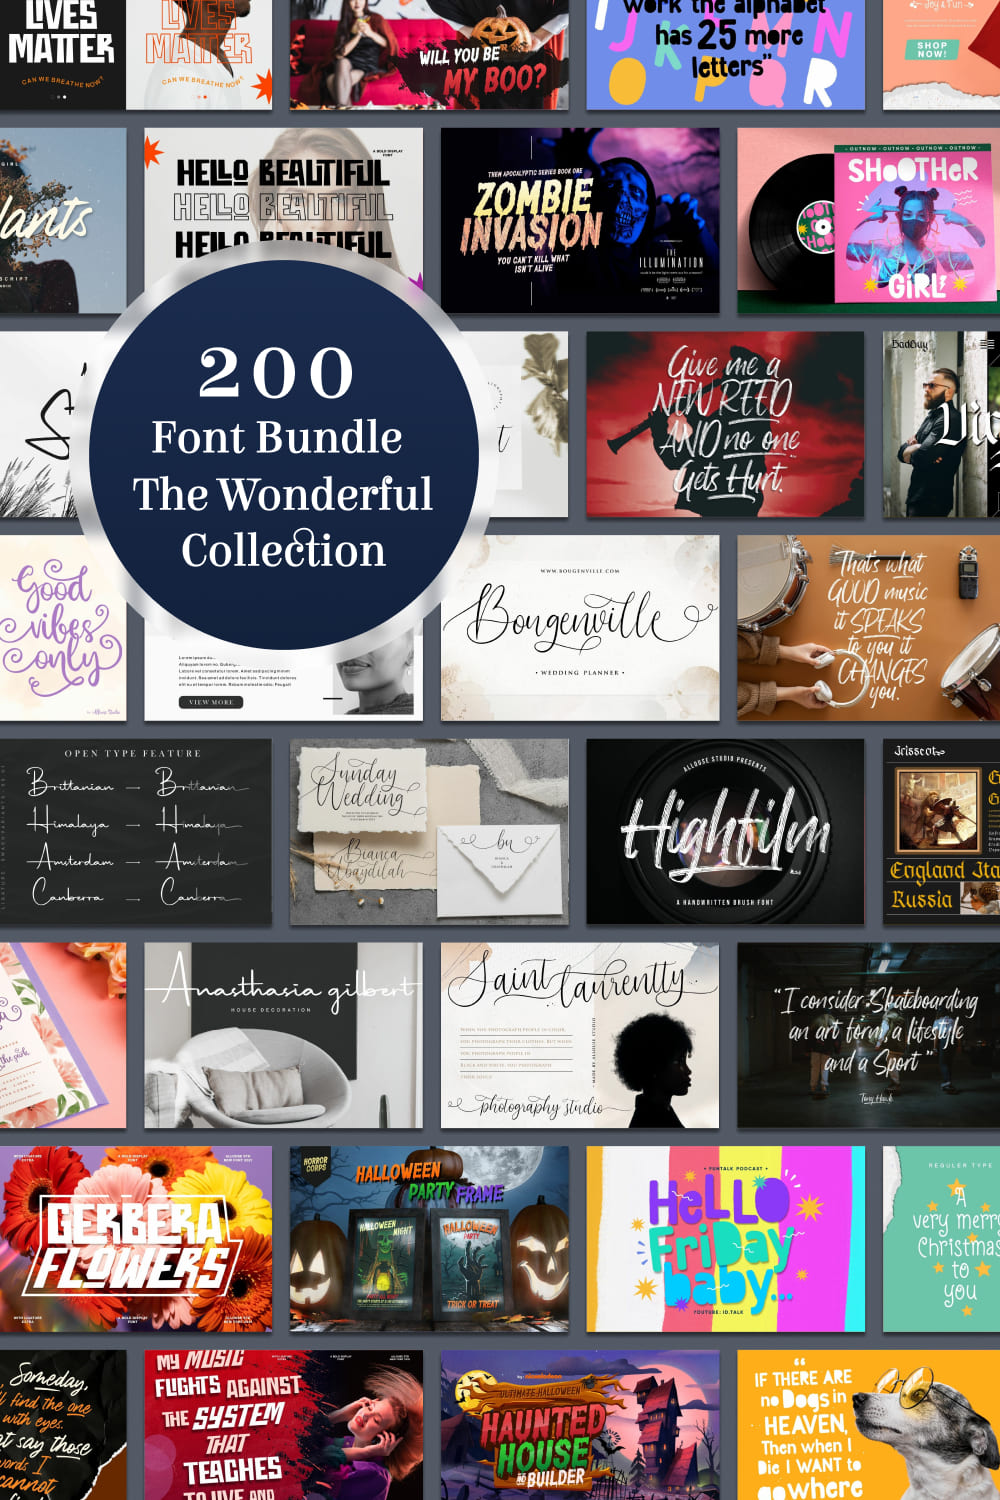 the wonderful collection 200 font bundle 03